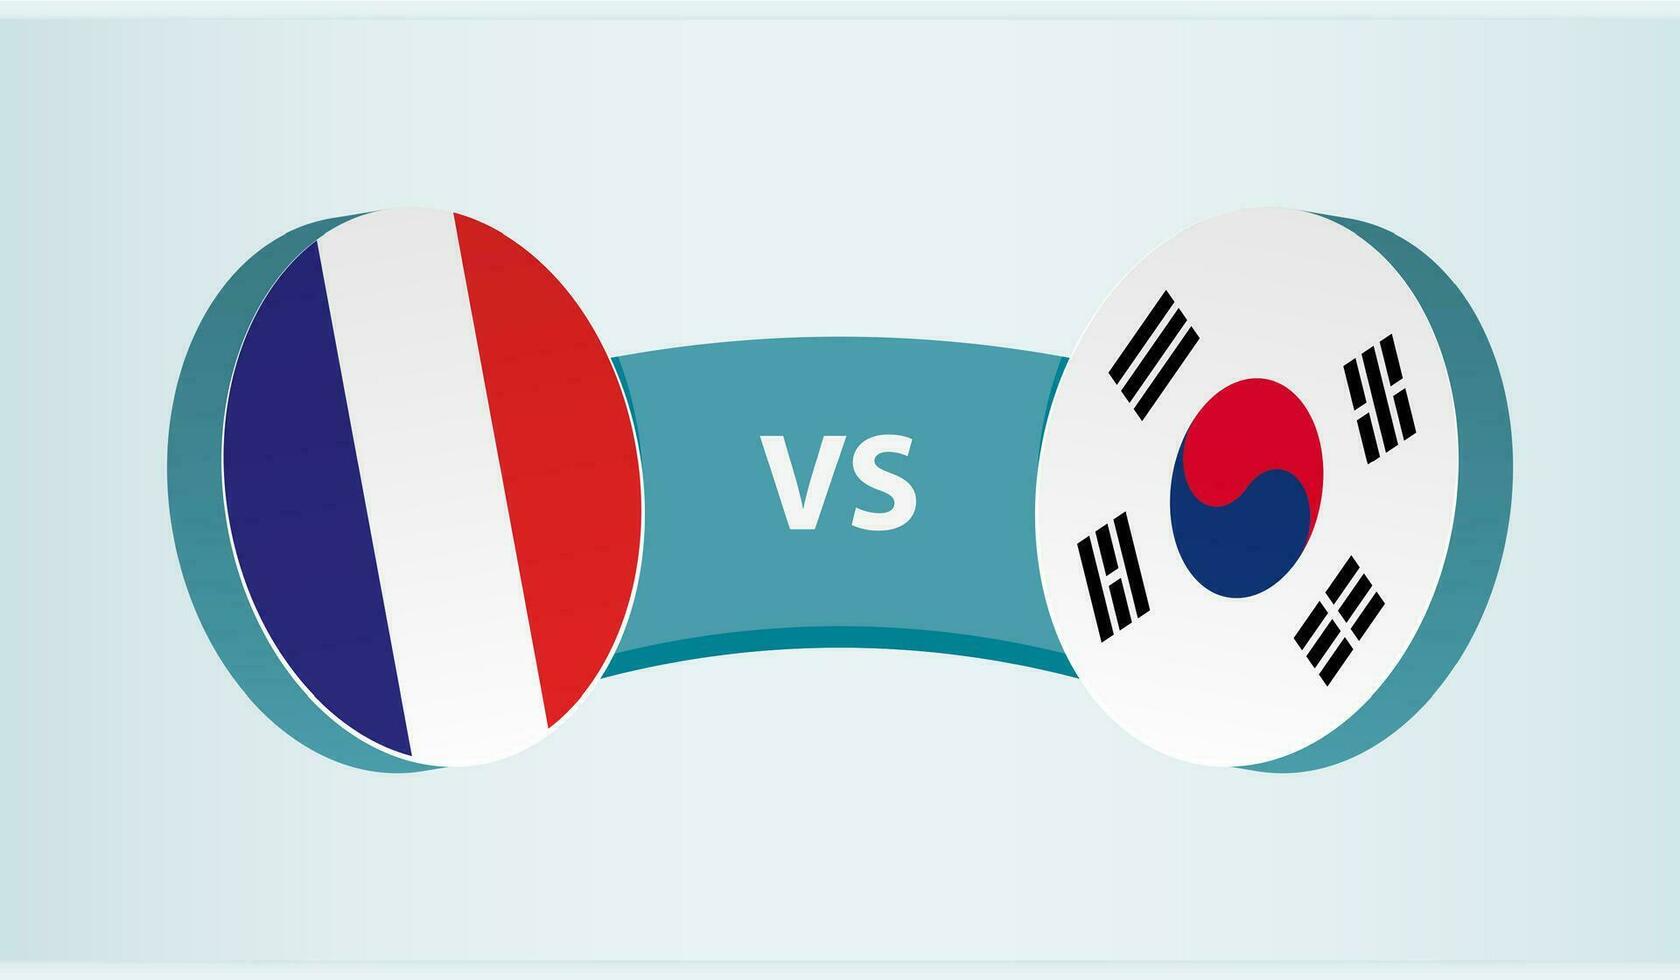 France versus South Korea, team sports competition concept. vector